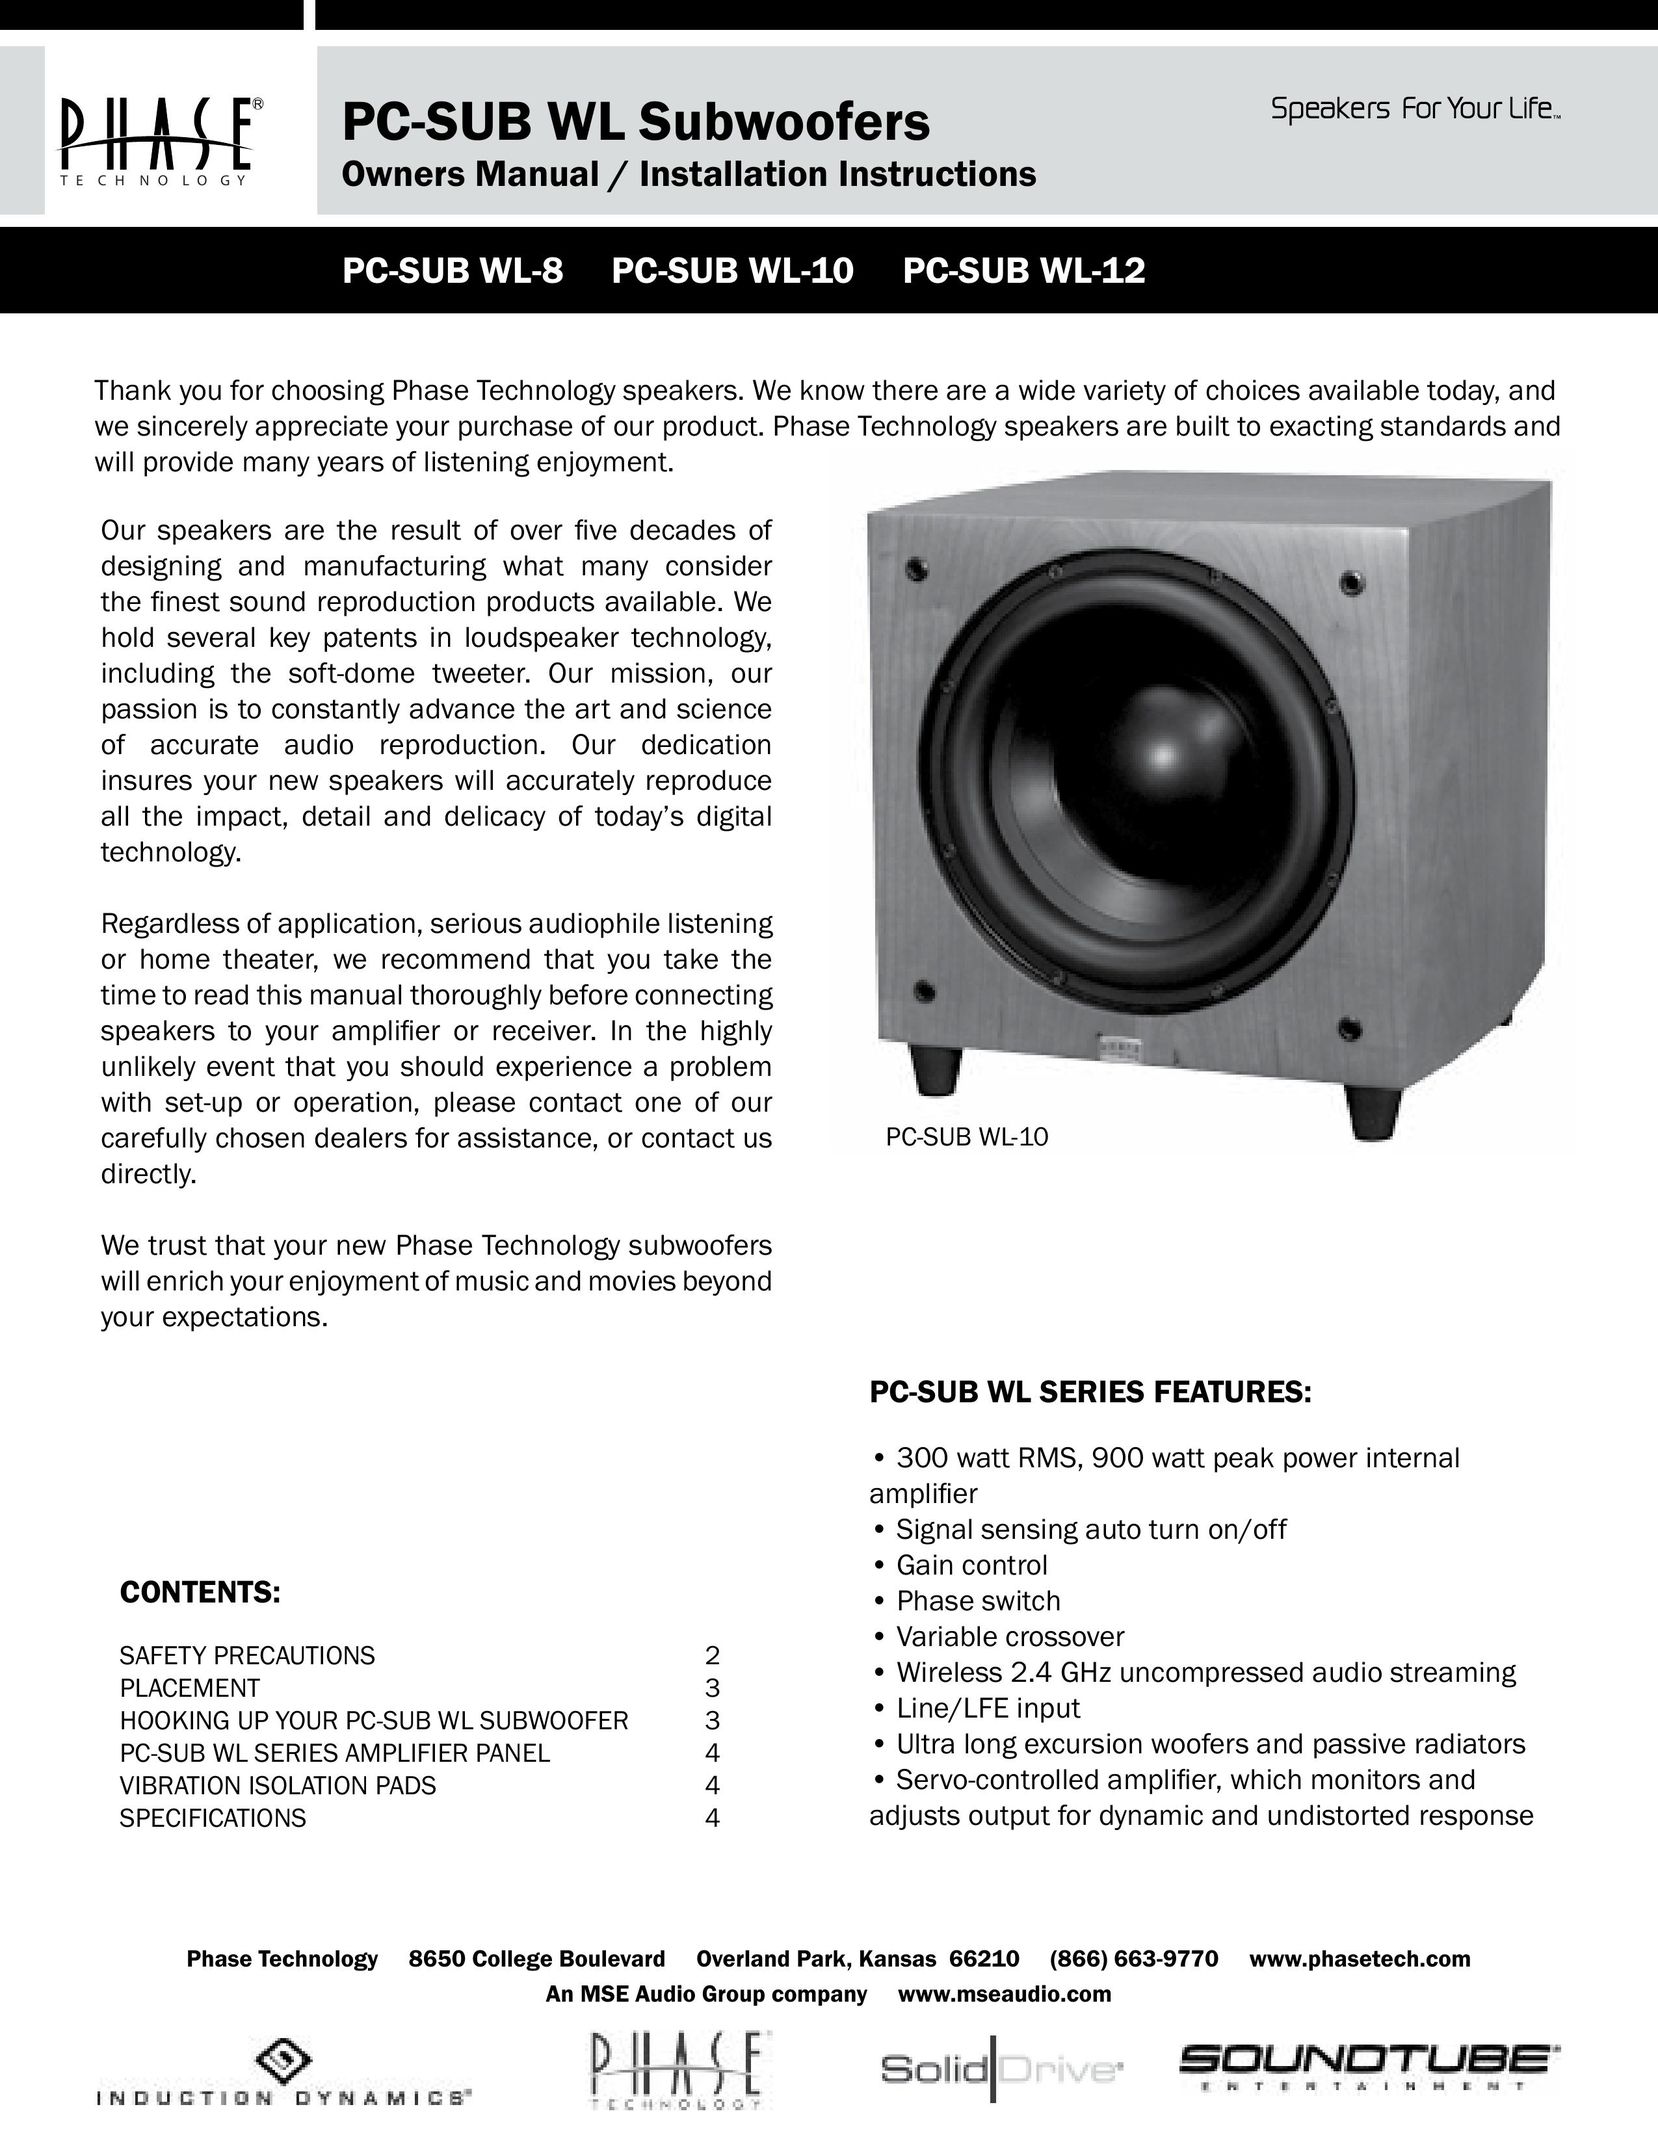 Phase Technology PC-SUB WL-10 Speaker User Manual